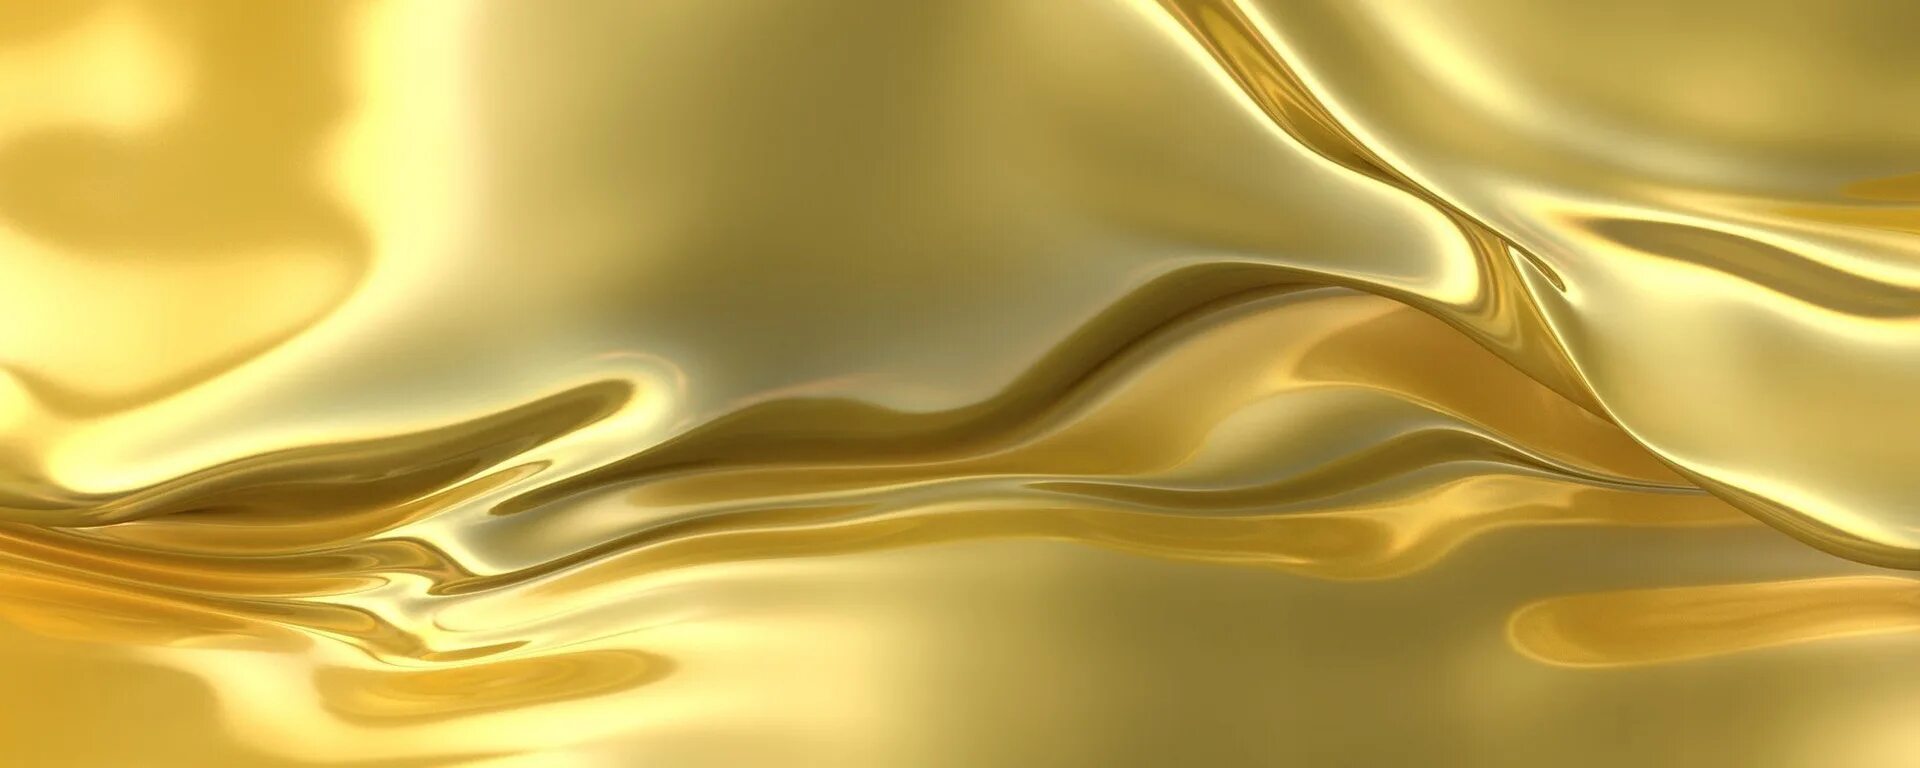 Красивый фон золото. Золото металлик lx19240. Золотистый фон. Золото текстура. Темное золото цвет.